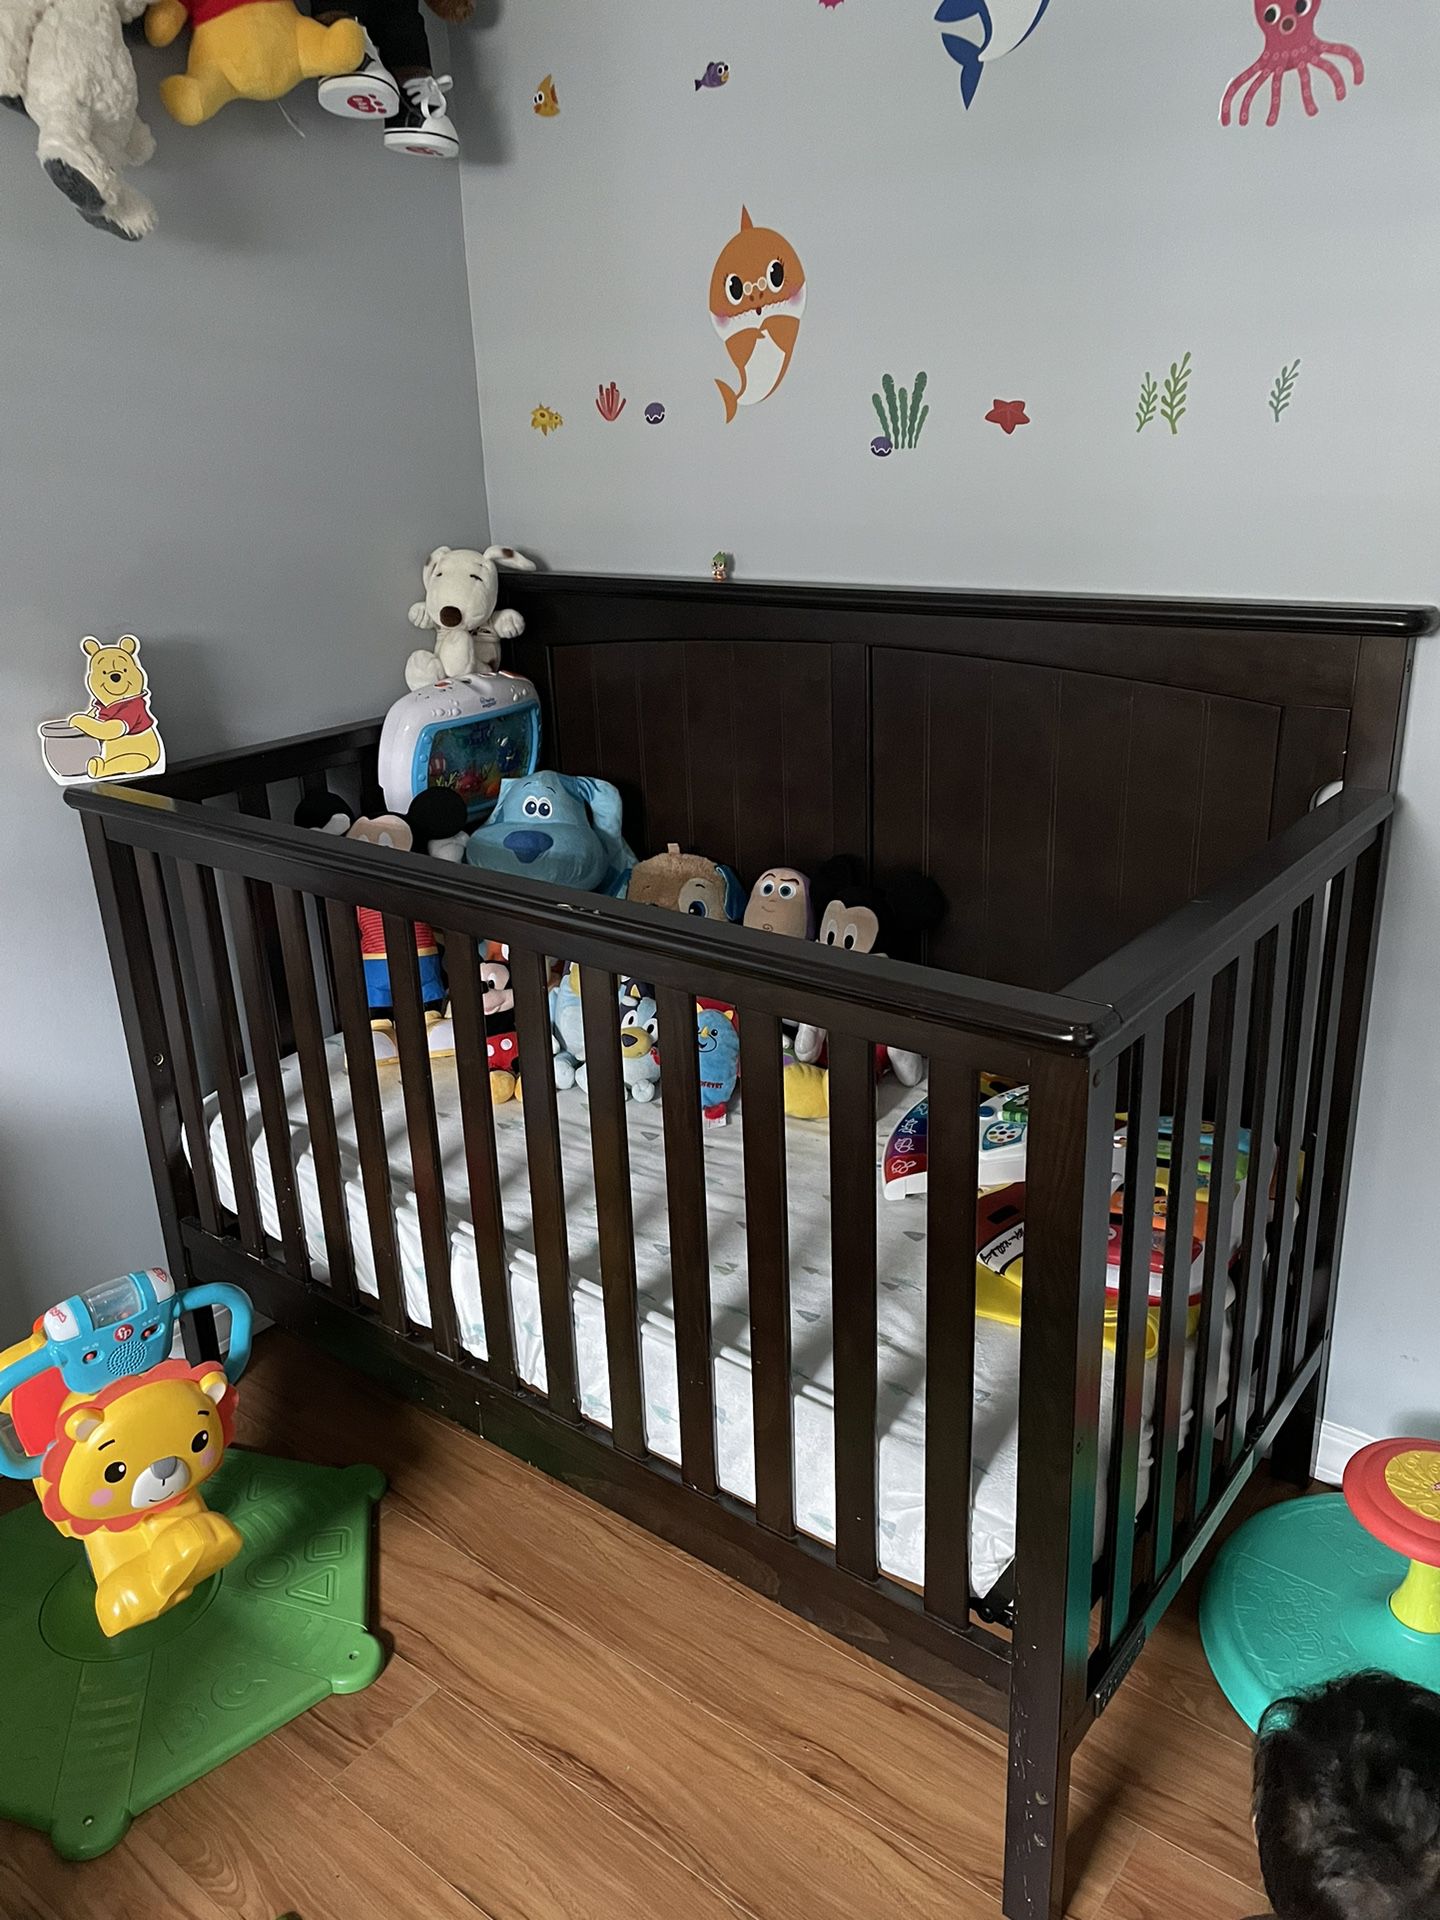 Child Craft 4-in-1 Convertible Crib And Mattress 